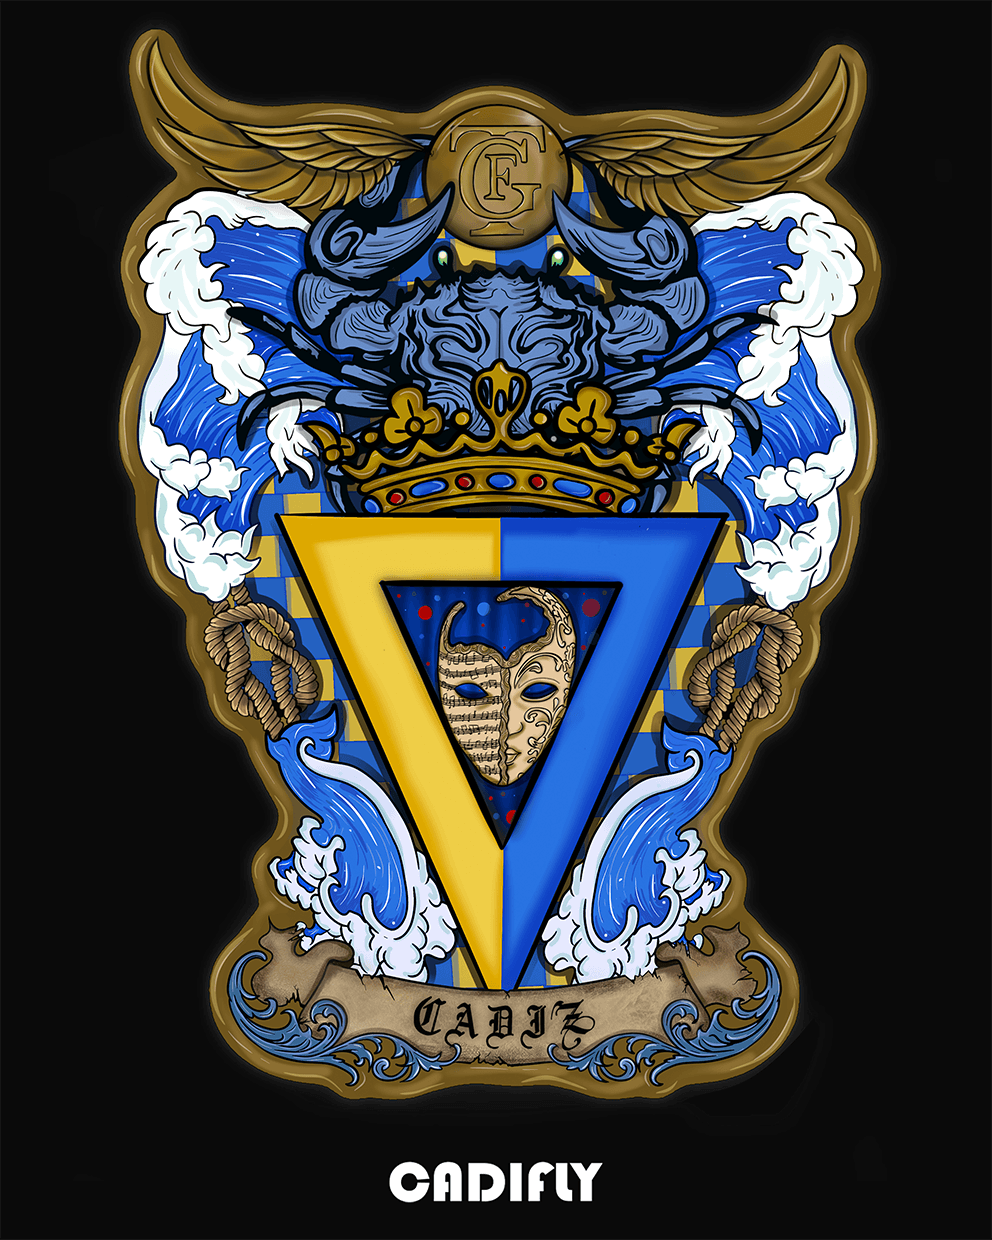 Diseño escudo del Cadiz C.F al estilo harry potter 